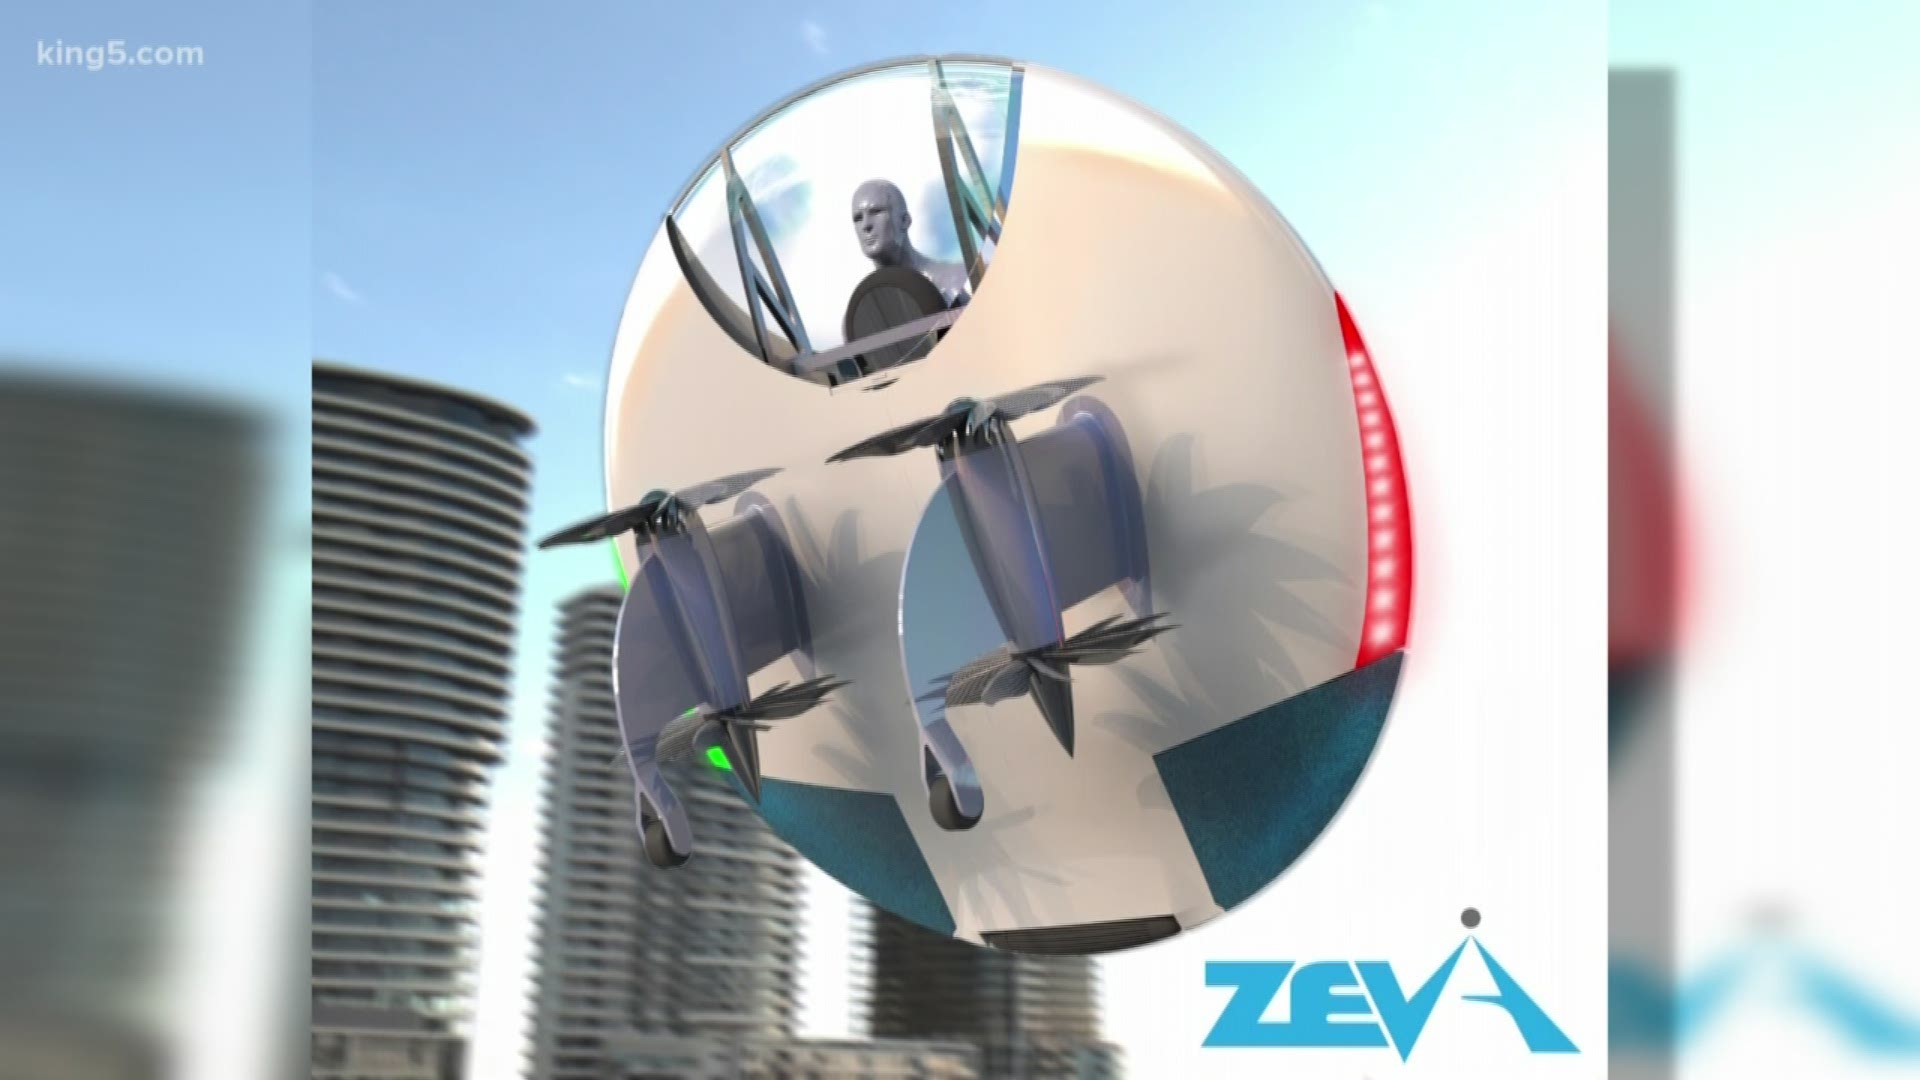 Tacoma-based Zeva wants to build a person flying saucer. KING 5's Jenna Hanchard reports: 